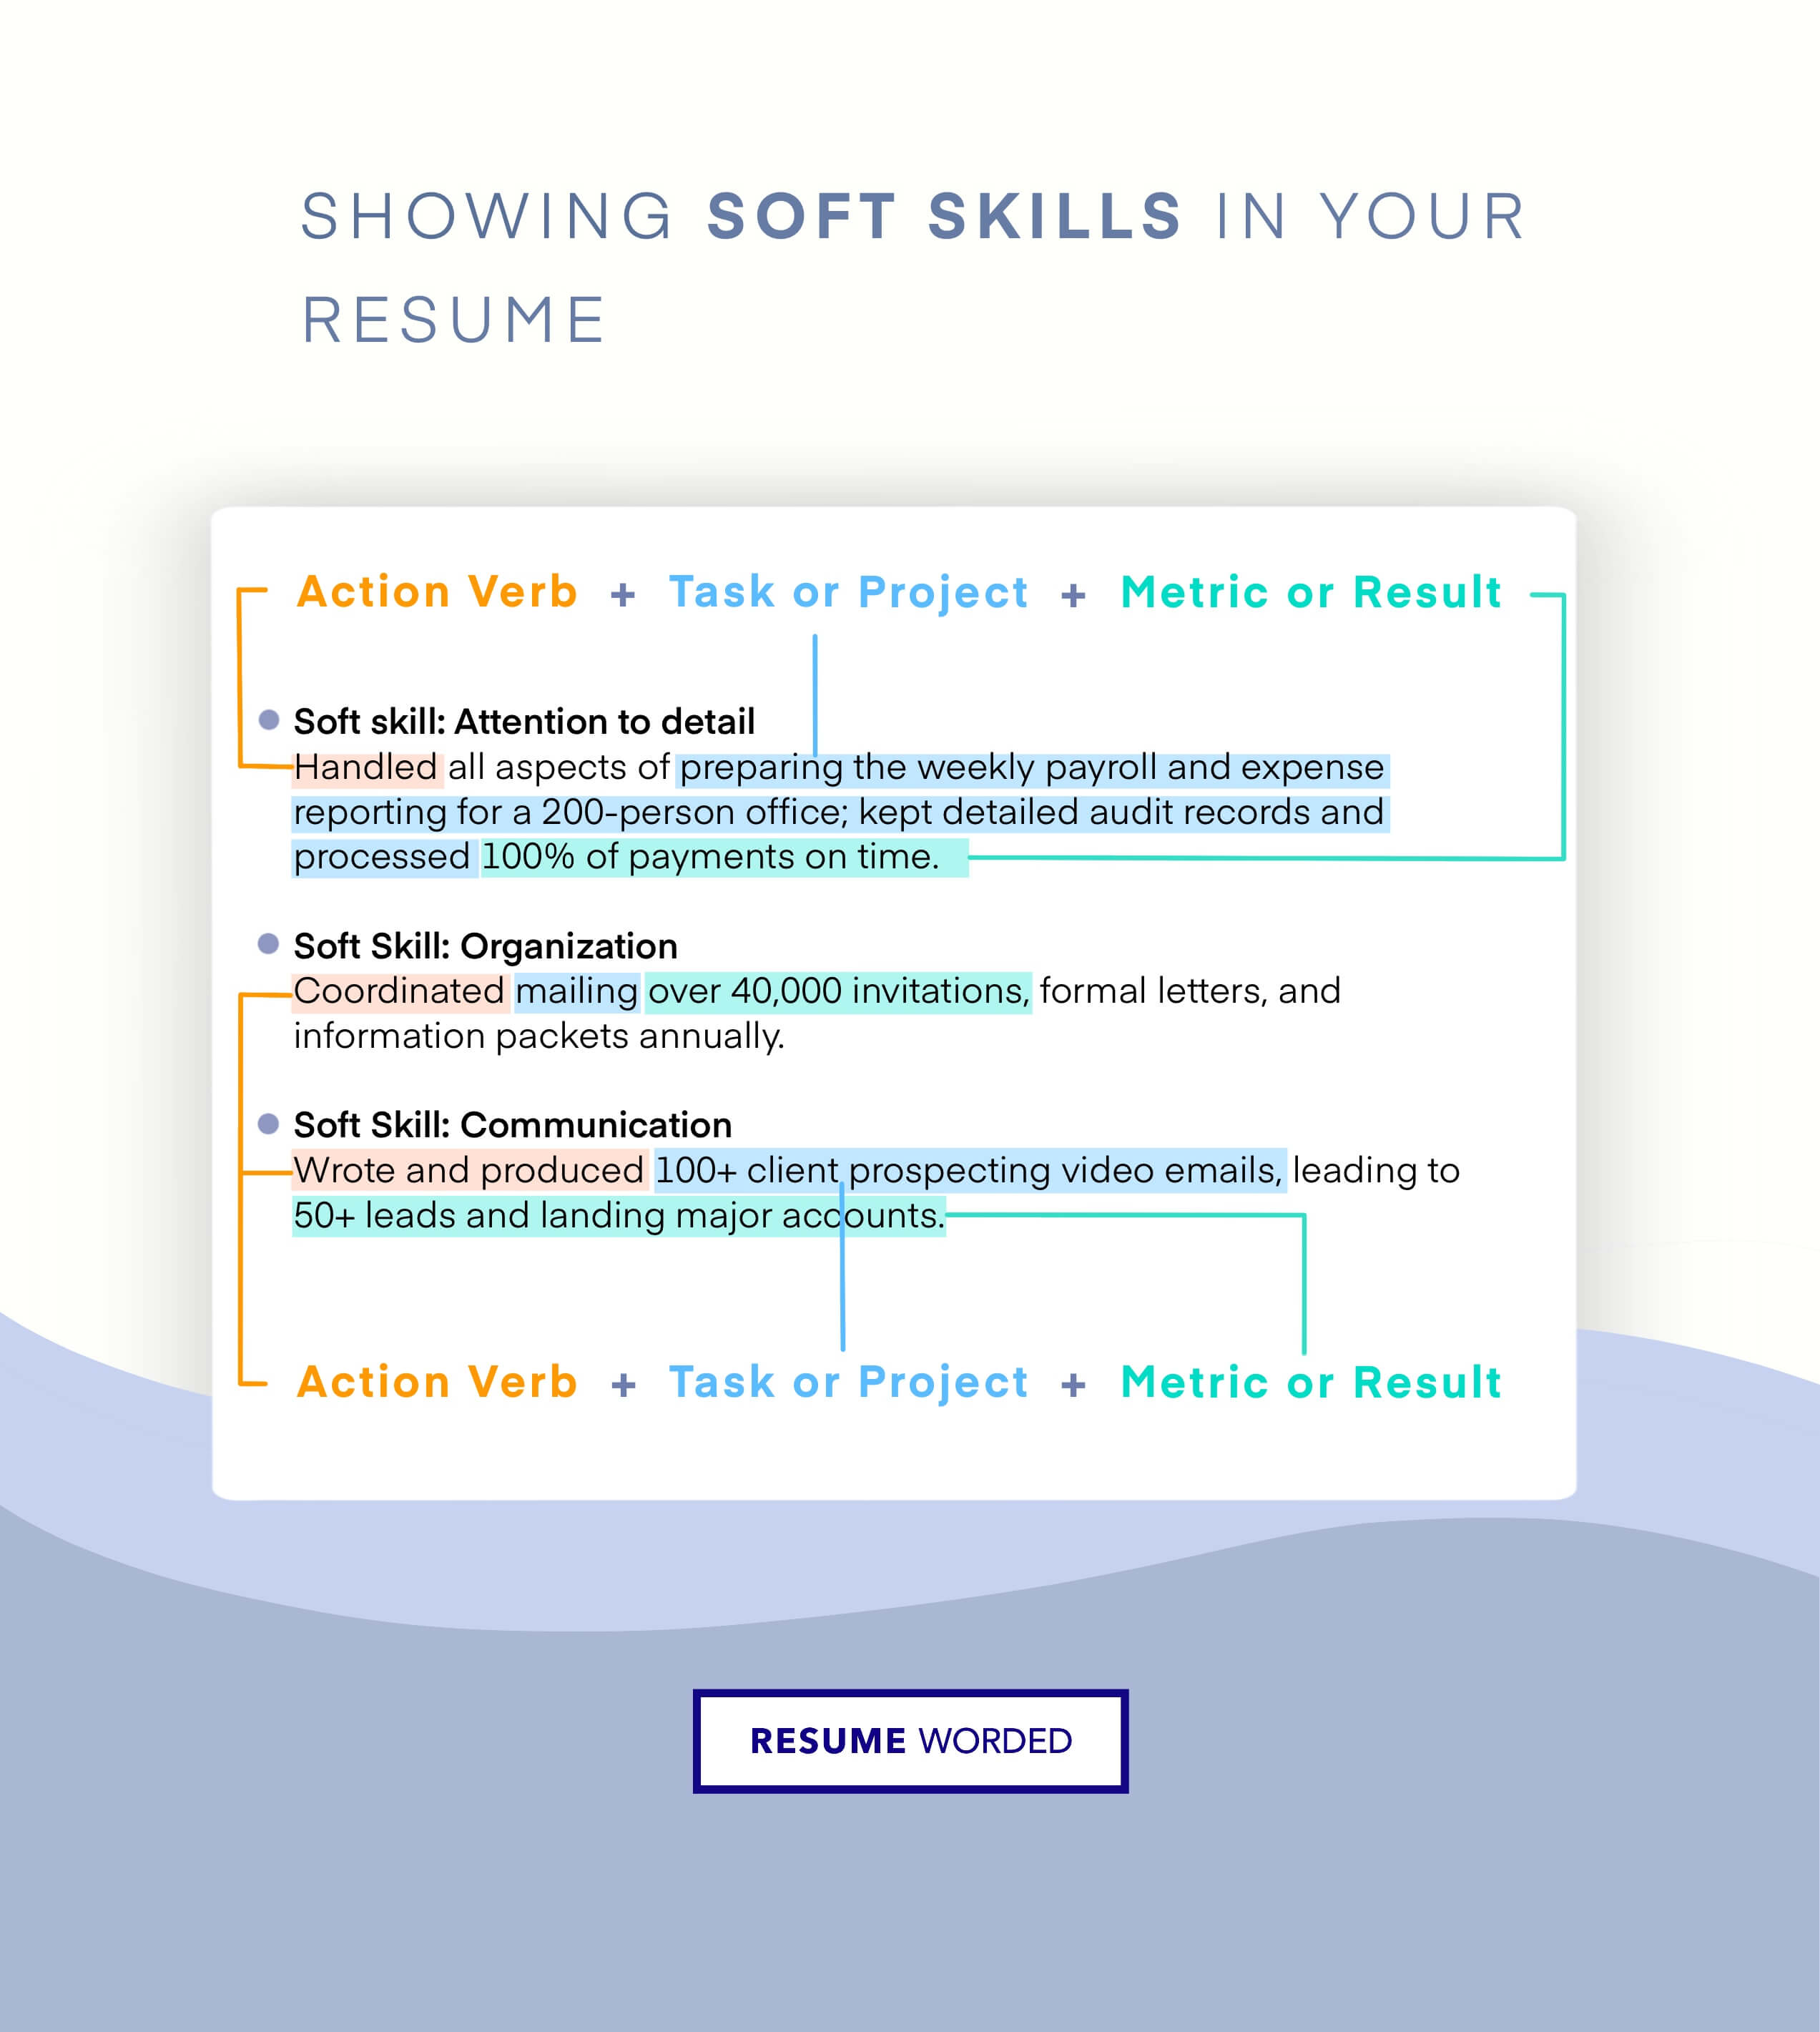 Showcase your soft skills - Solutions Engineer CV